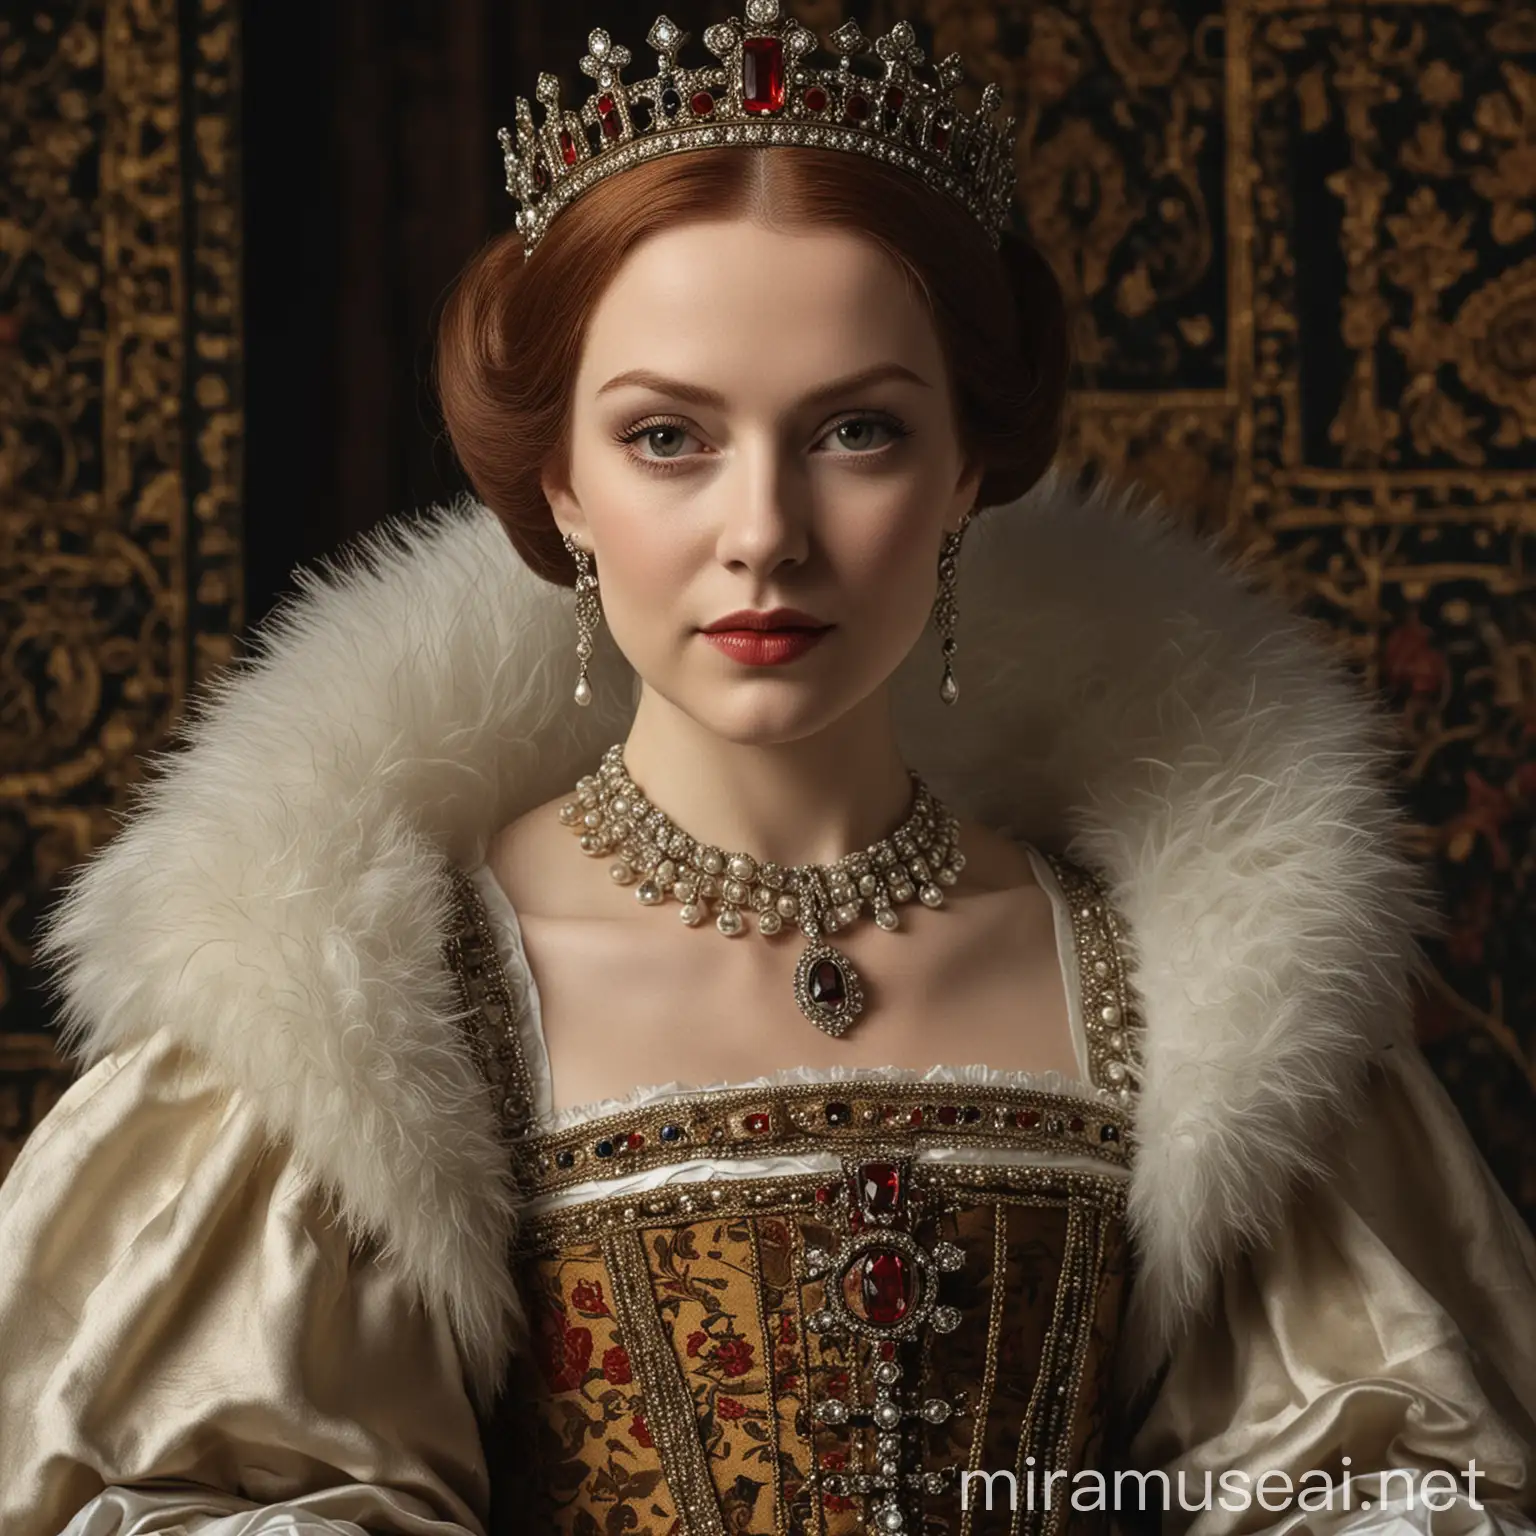 Tudor queen